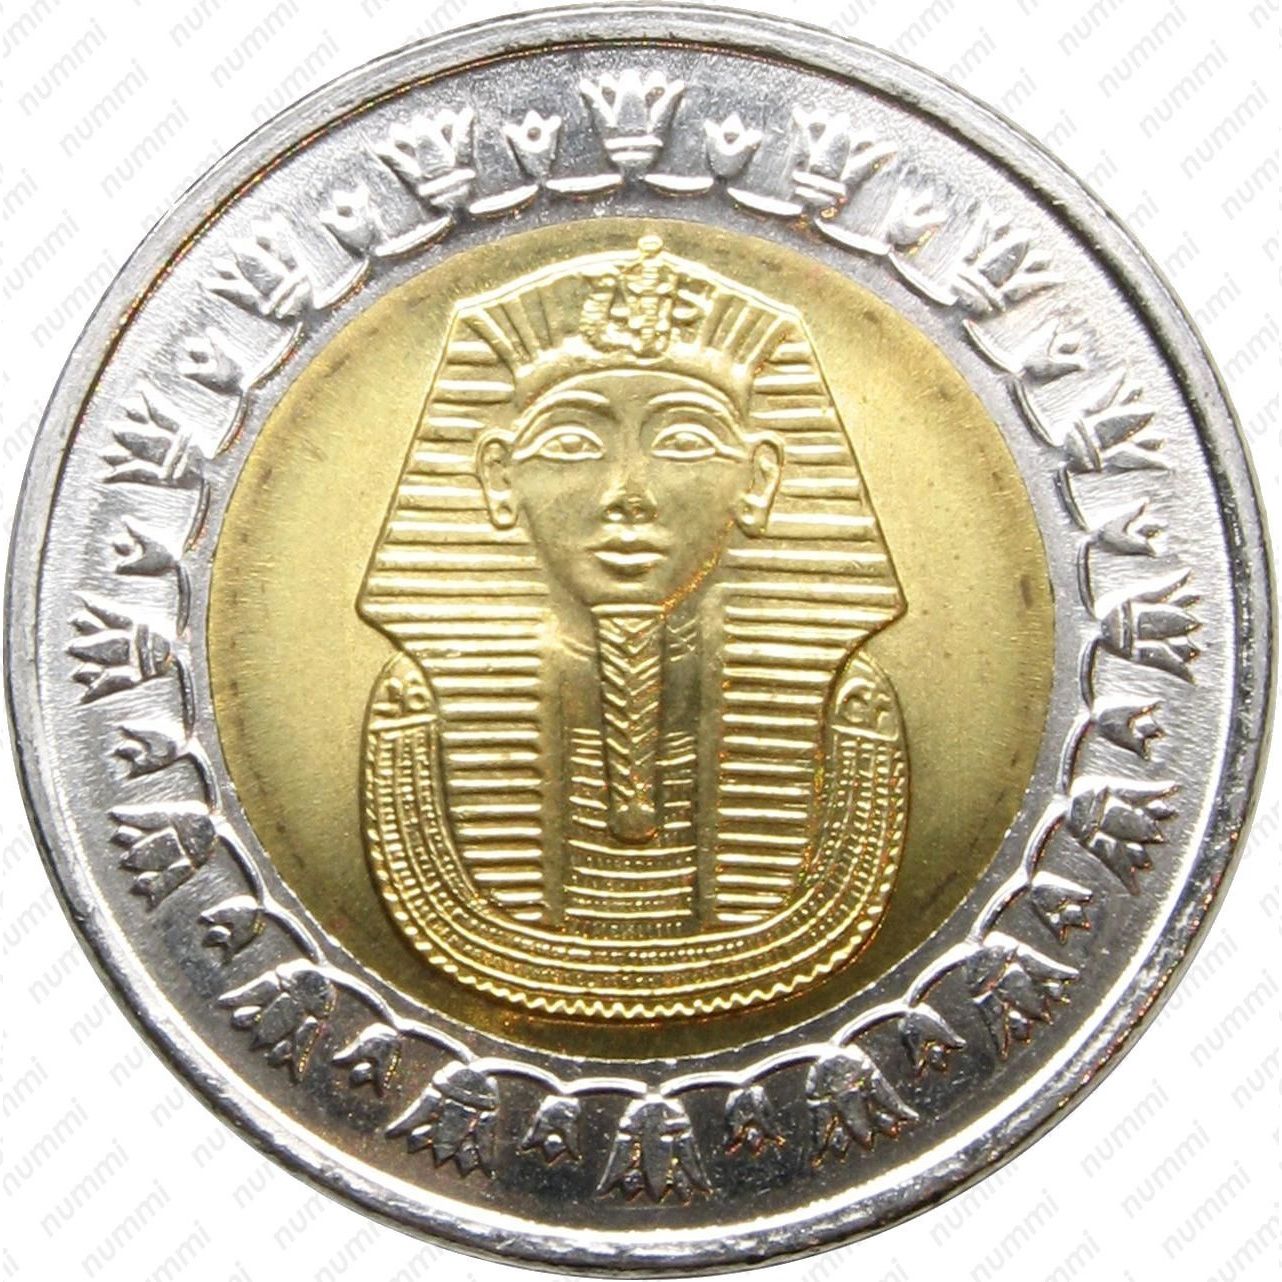 First coins. Монета Египта 1 паундс. One pound монета Египет. Монета Египта 1 фунт Тутанхамон. Монета 1 pound Египет.